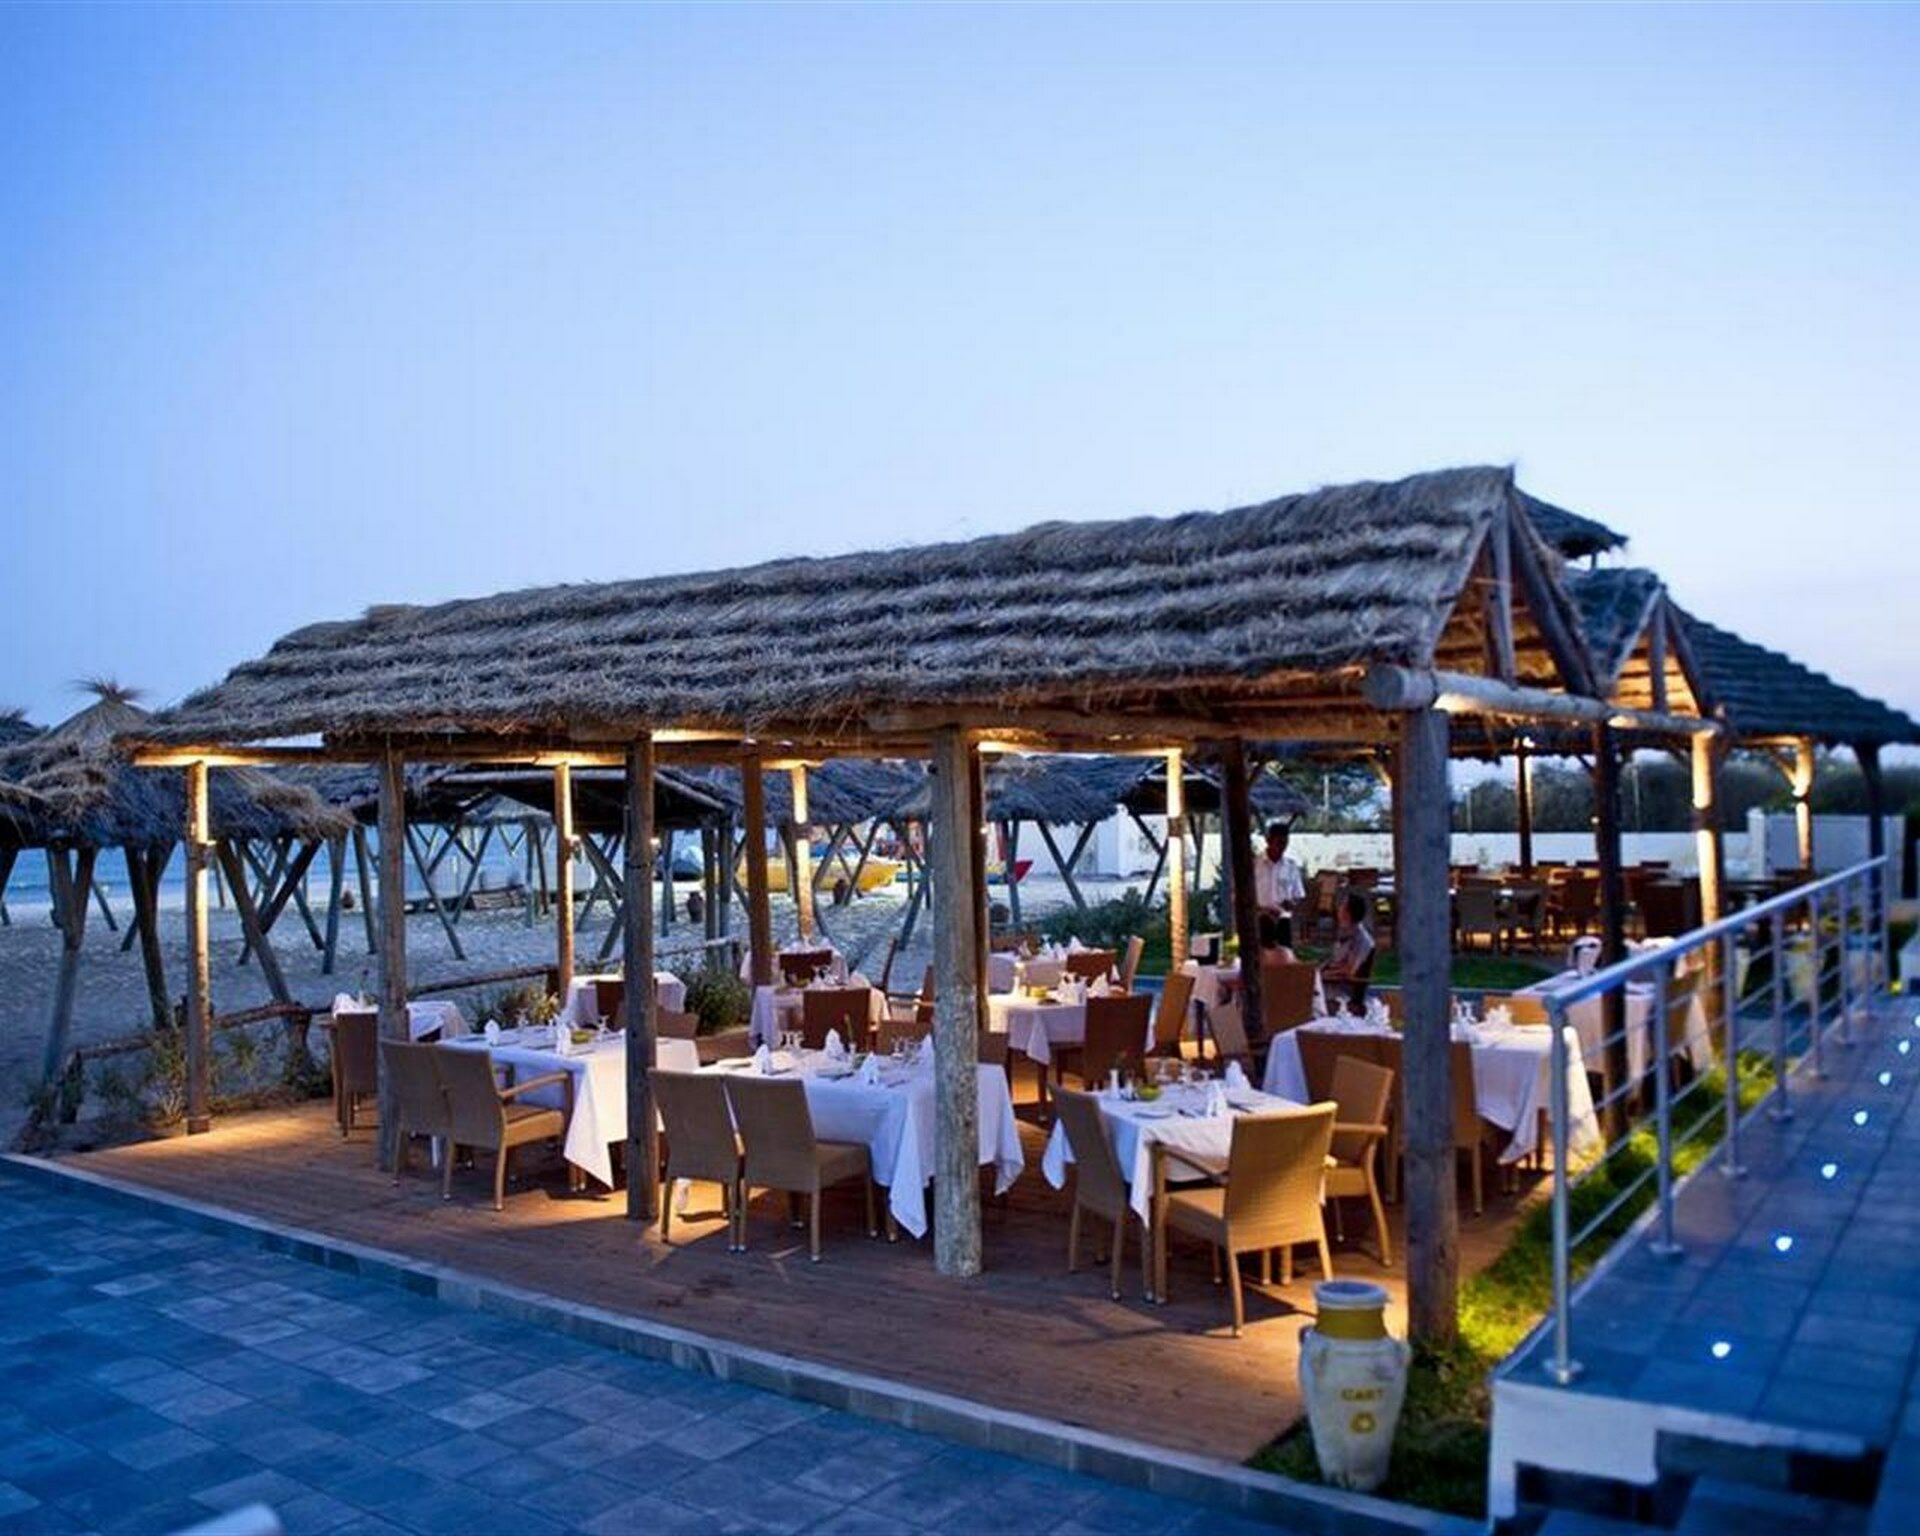 Naya Club Hôtel Orangers Beach Resort 4*Sup pas cher photo 11